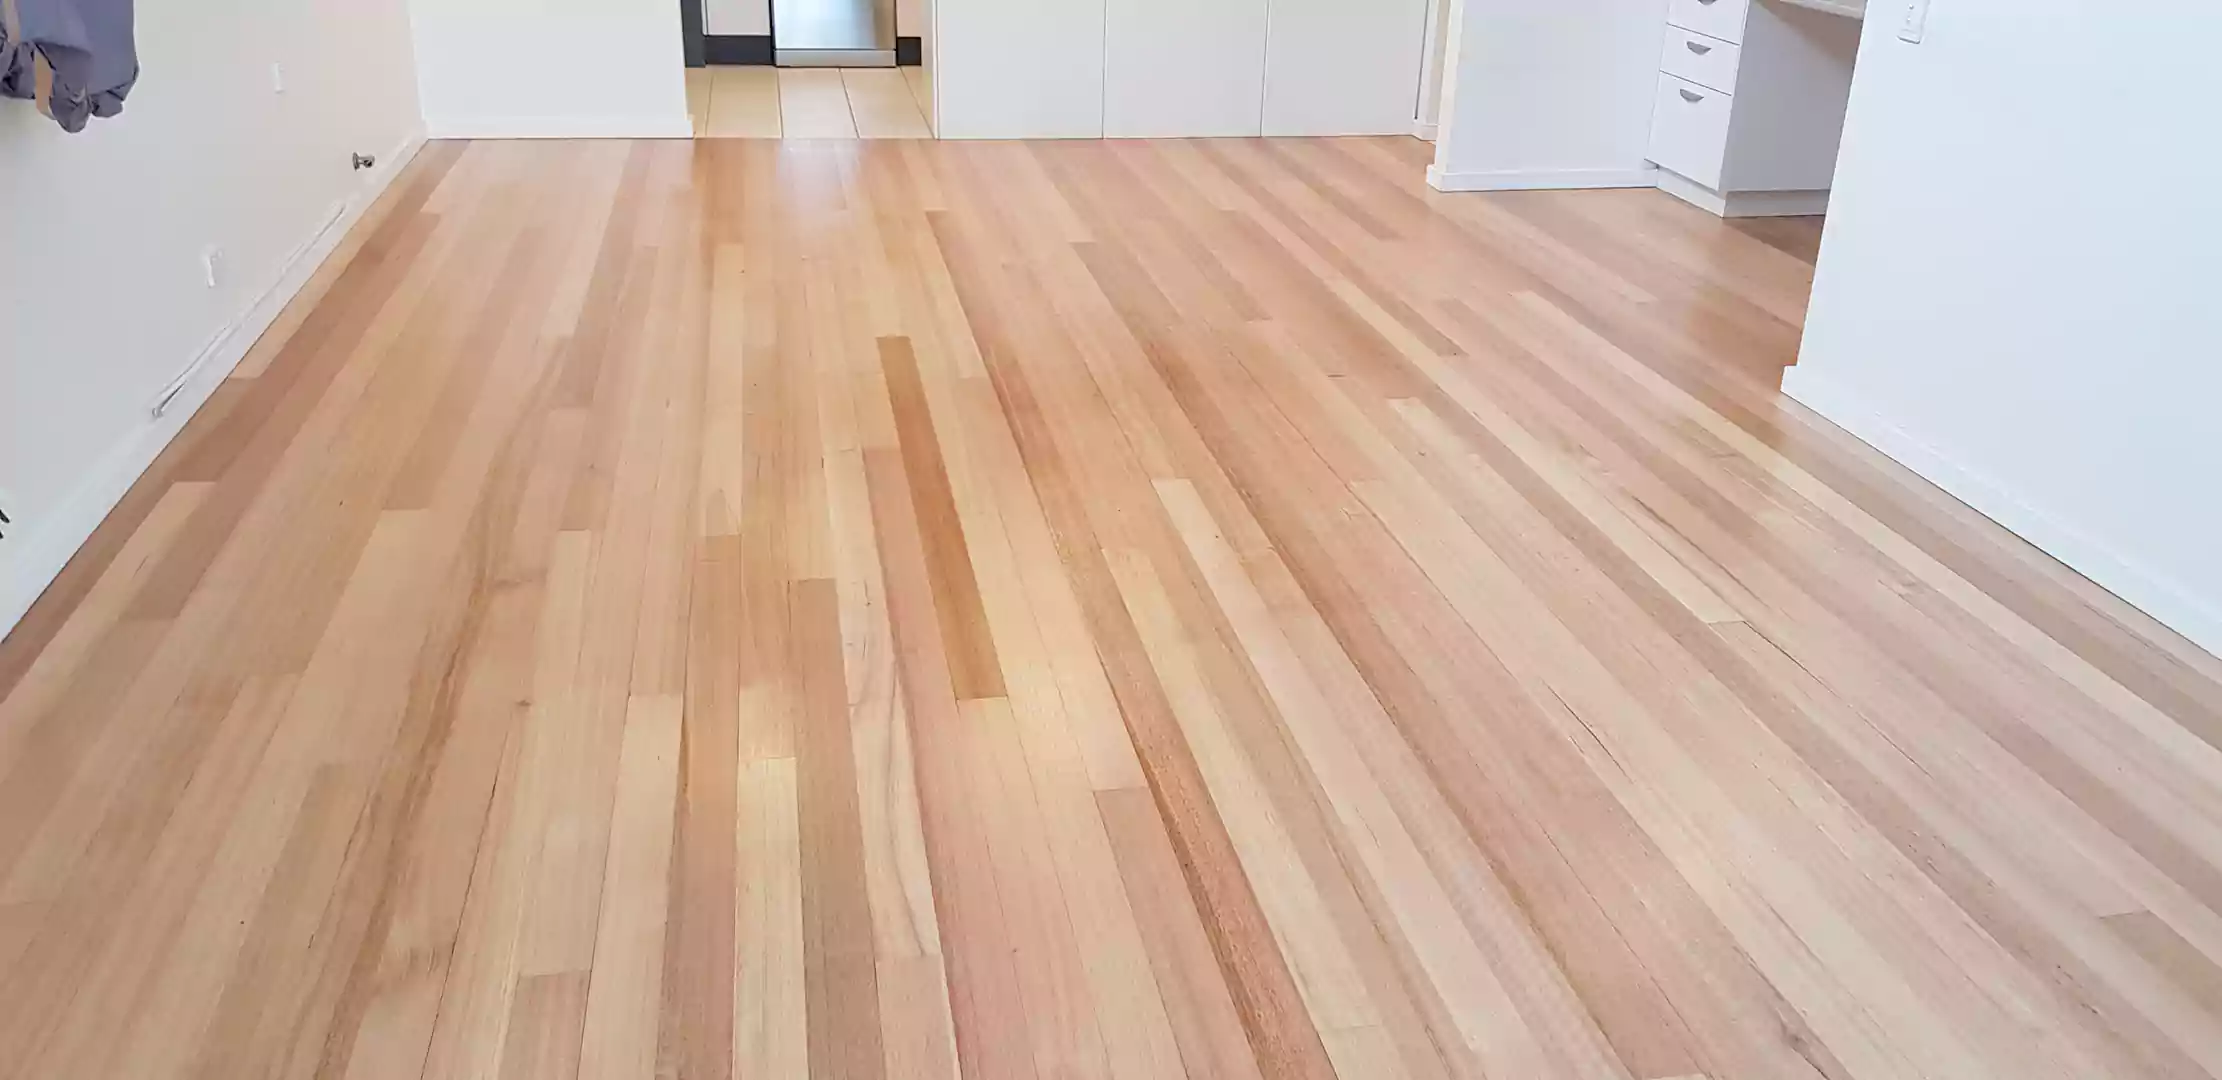 floor sanding and polishing - Newcastle Floor Sanders